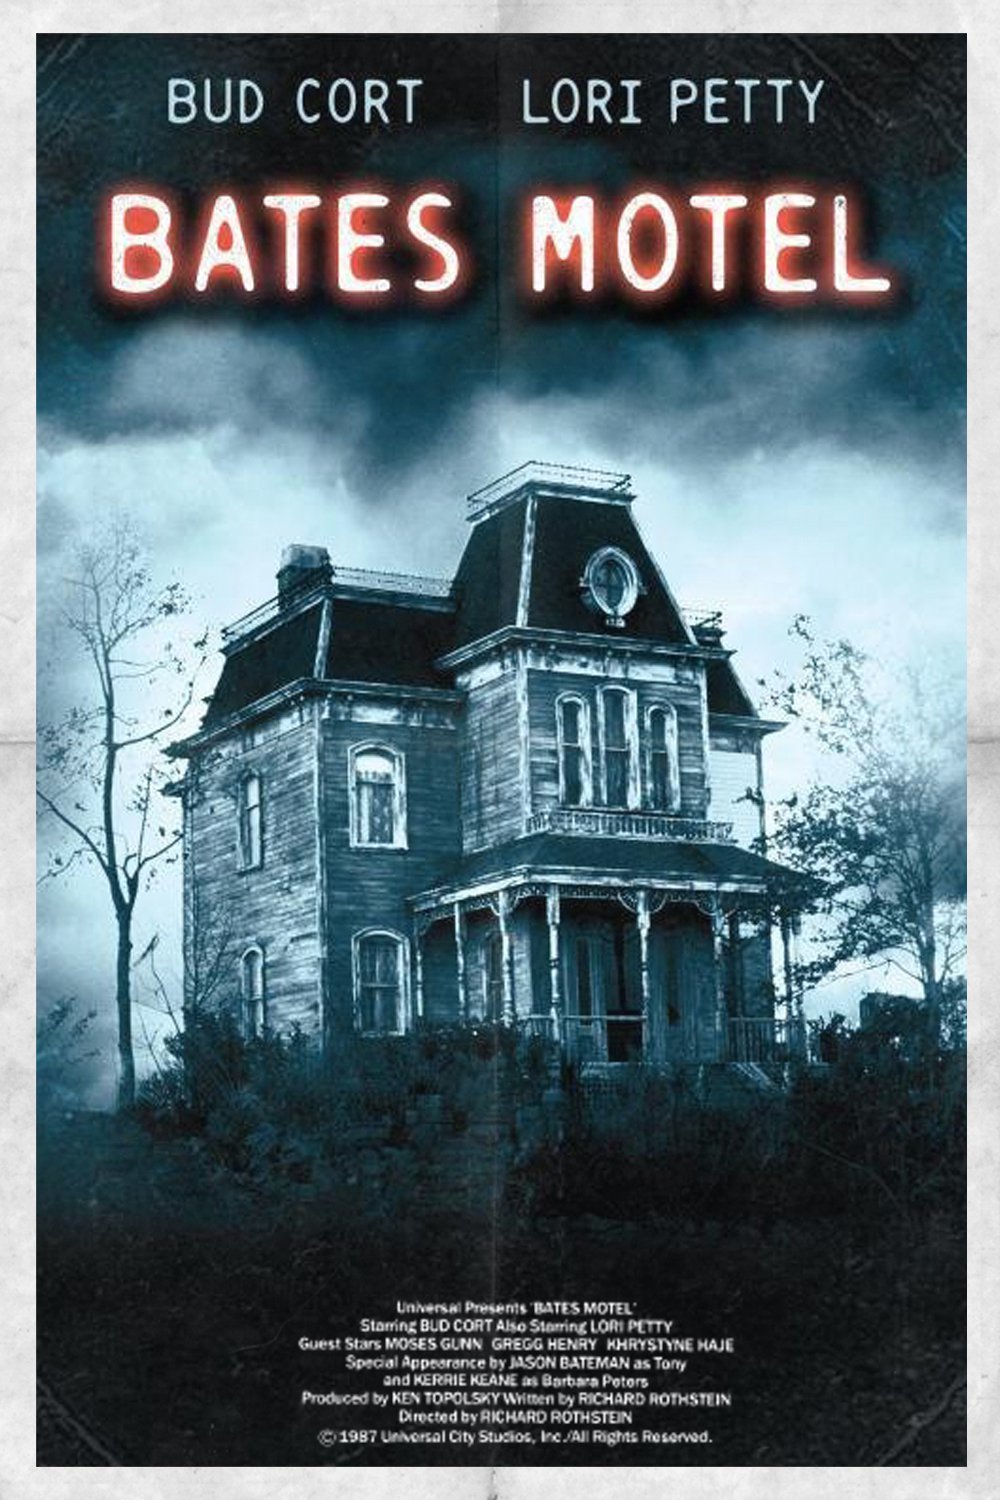 Bates Motel (1987) Poster